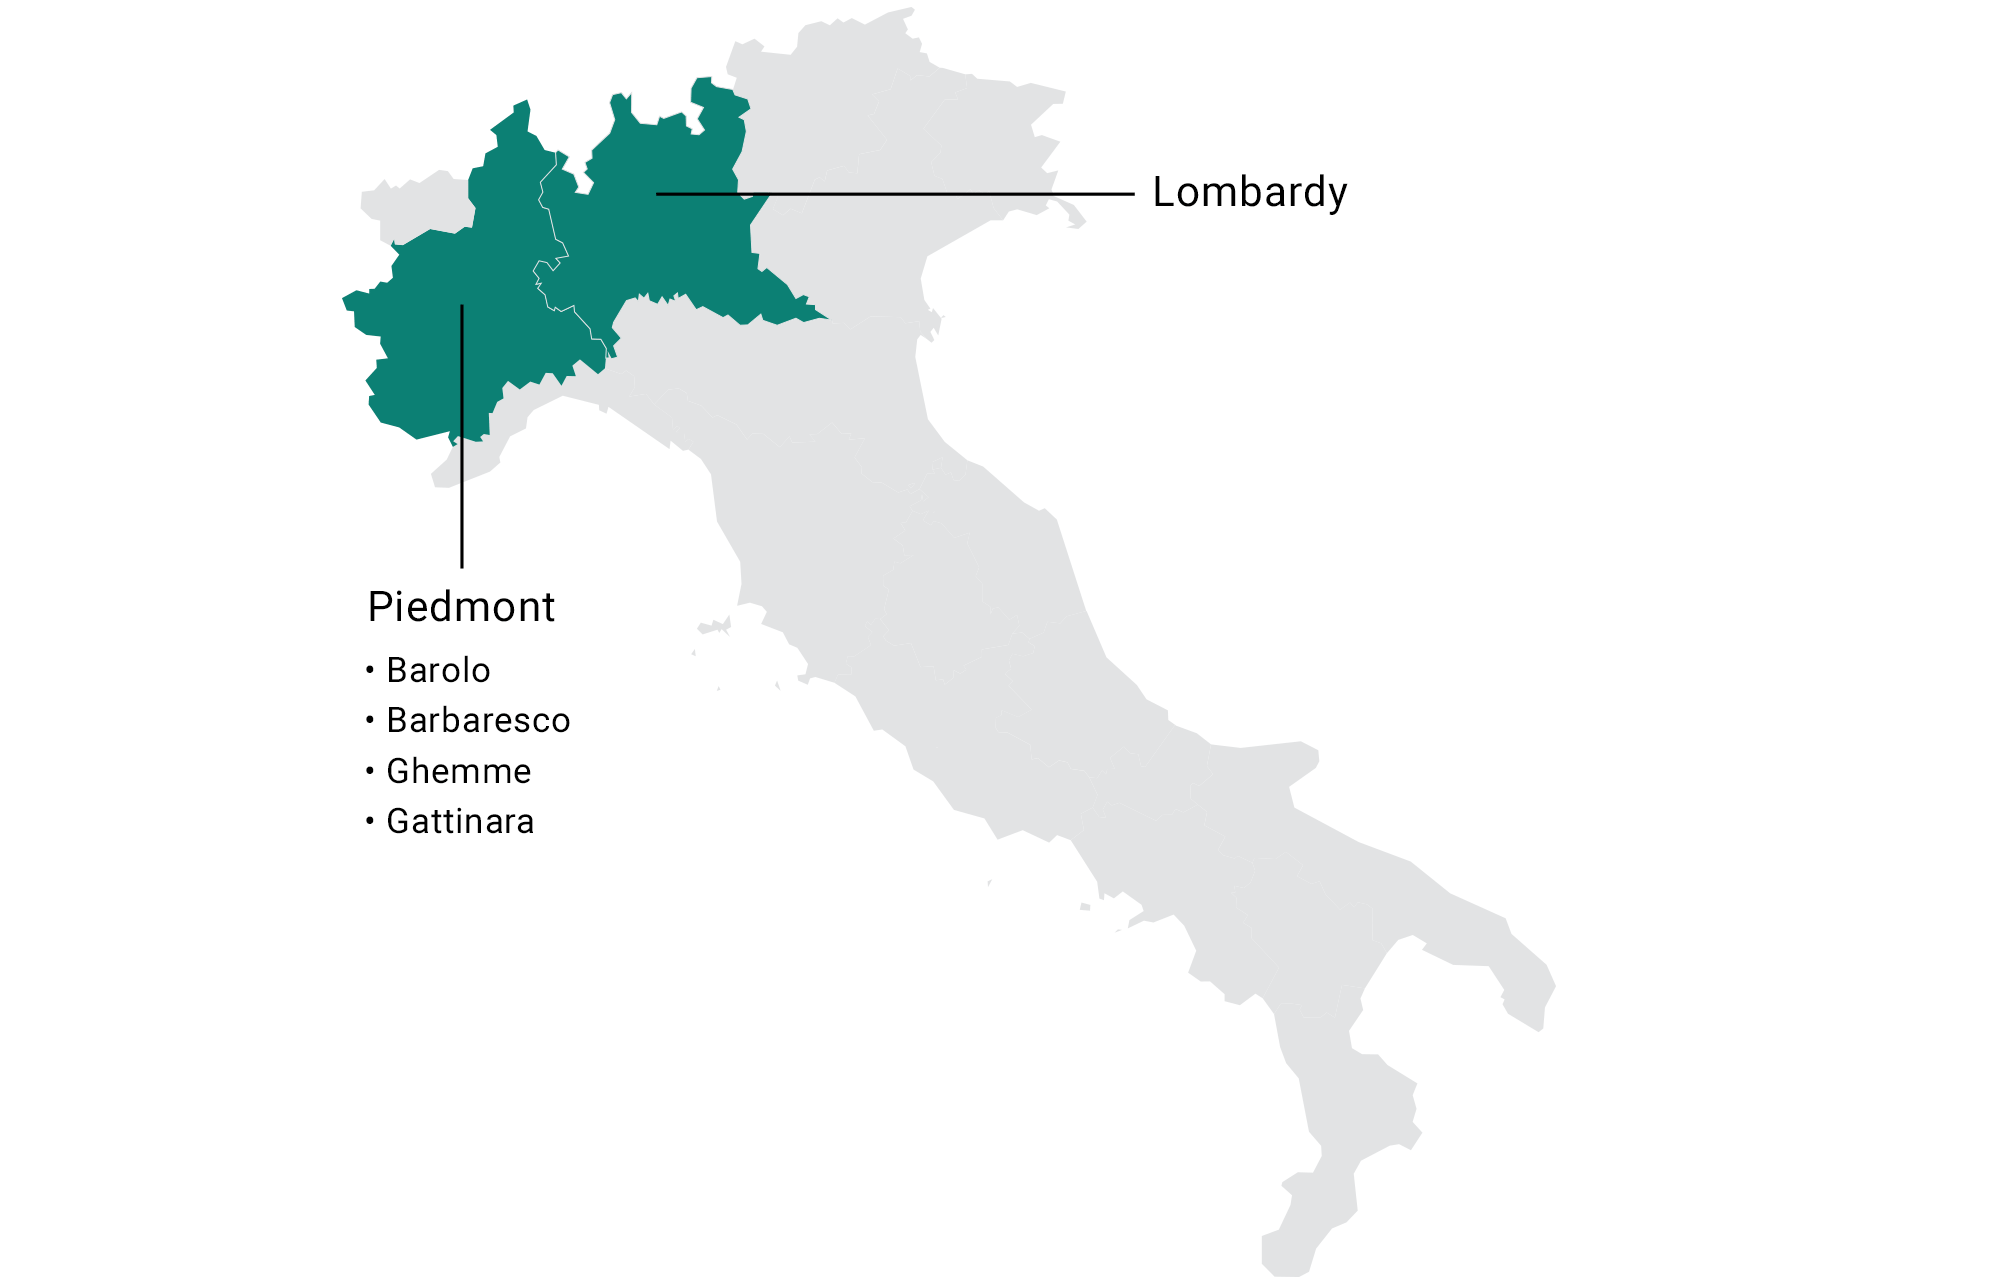 map of nebbiolo winegrowing regions in Italy: Piedmont, Lombardy